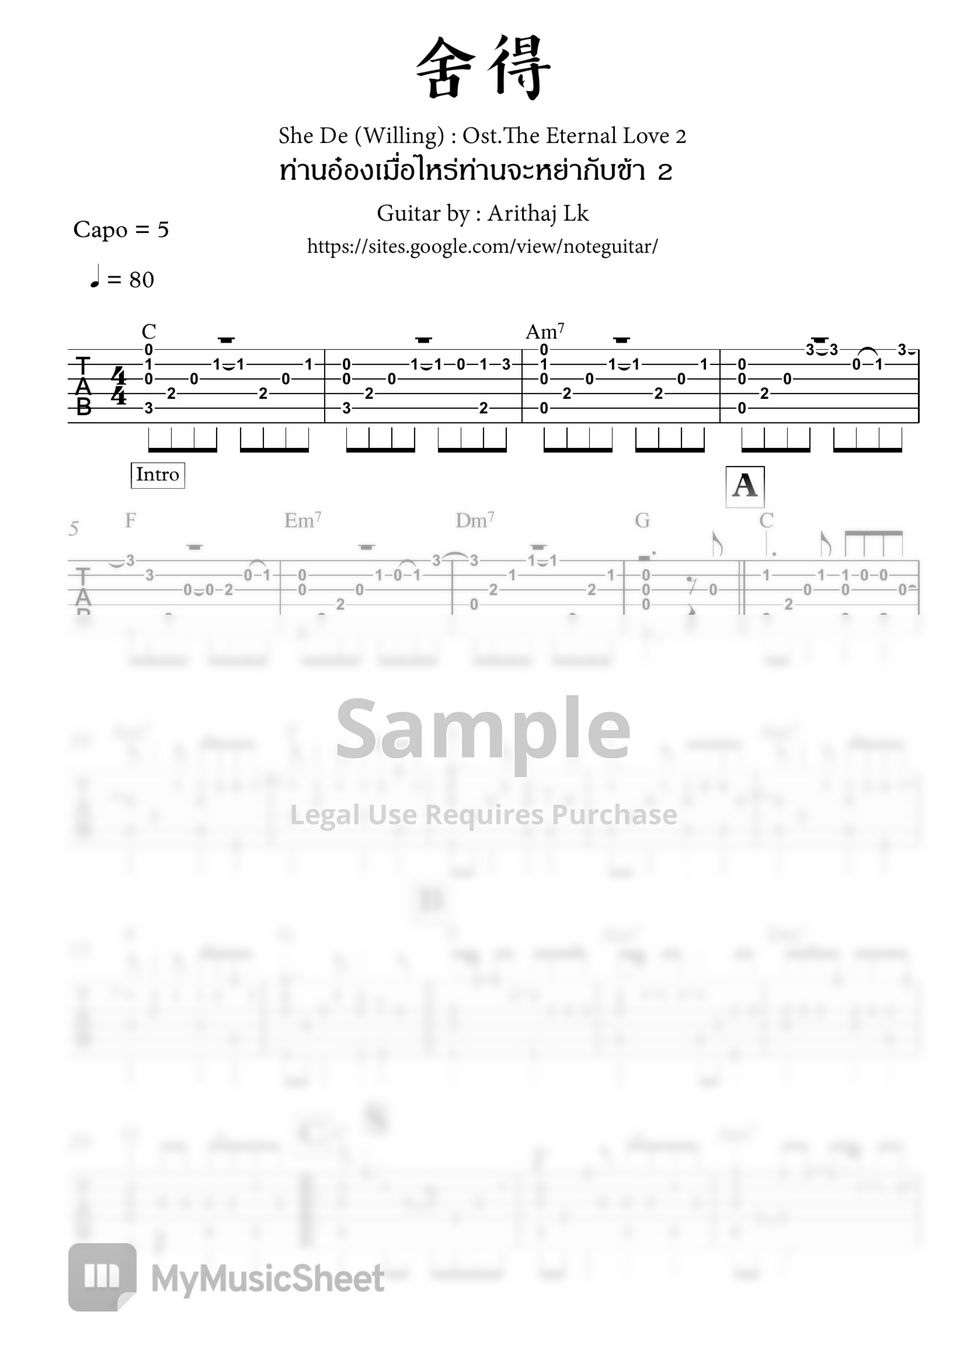 Ost.The Eternal Love - 舍得 Willing - Fingerstyle Guitar Sheets by Arithaj Lk